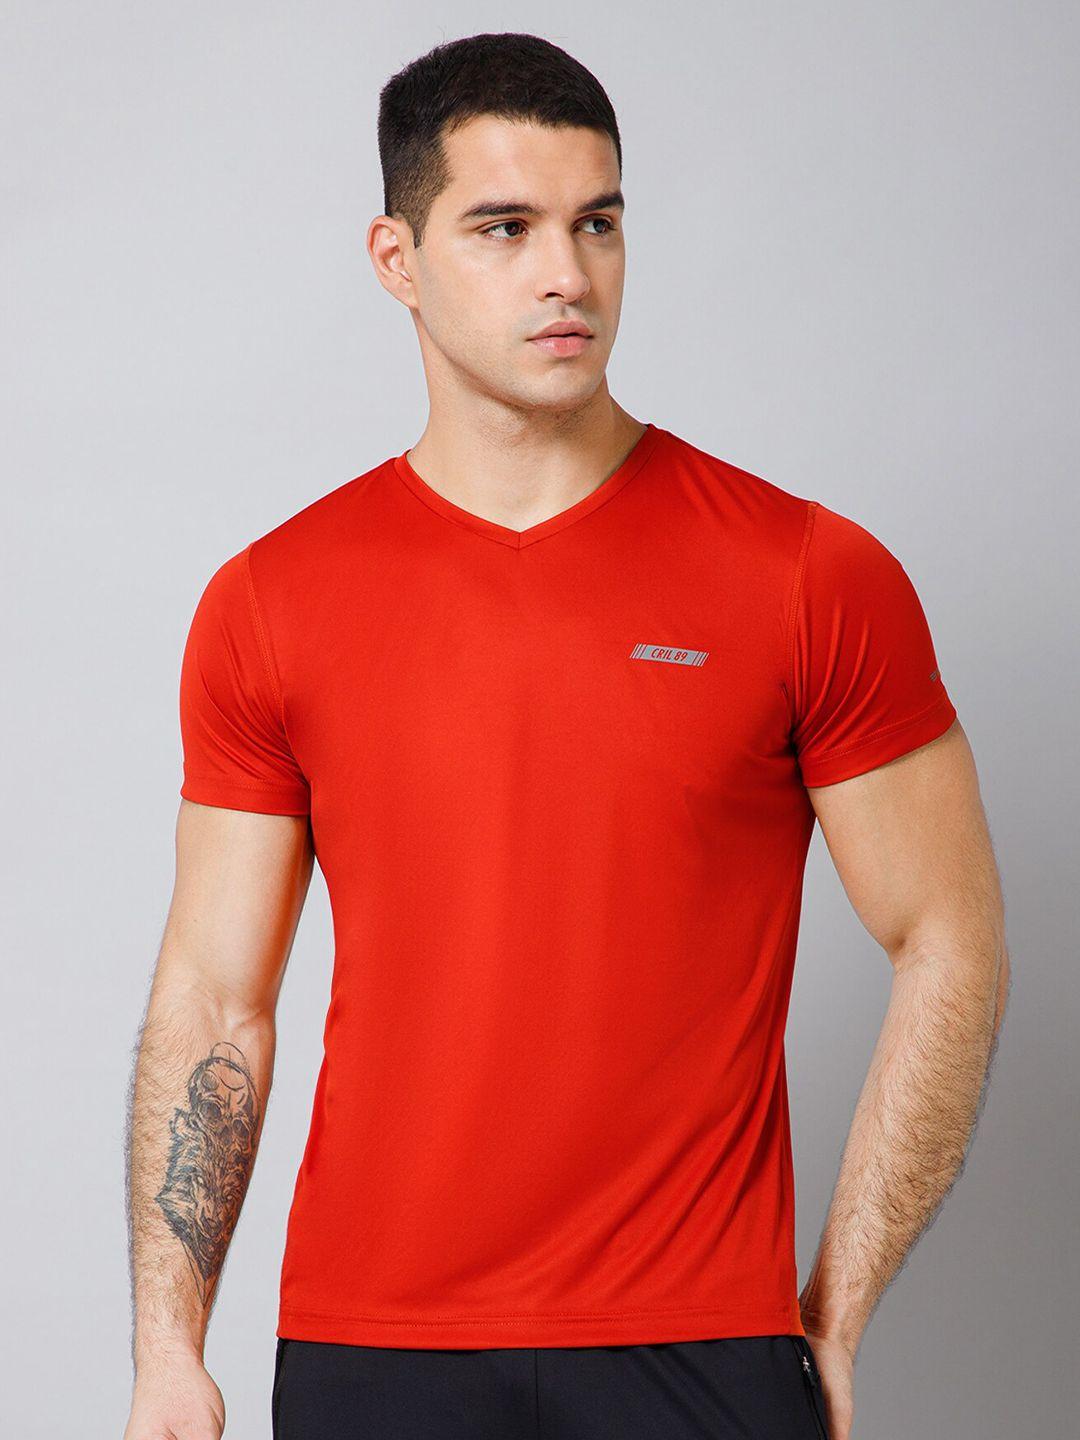 cantabil-v-neck-sports-t-shirt